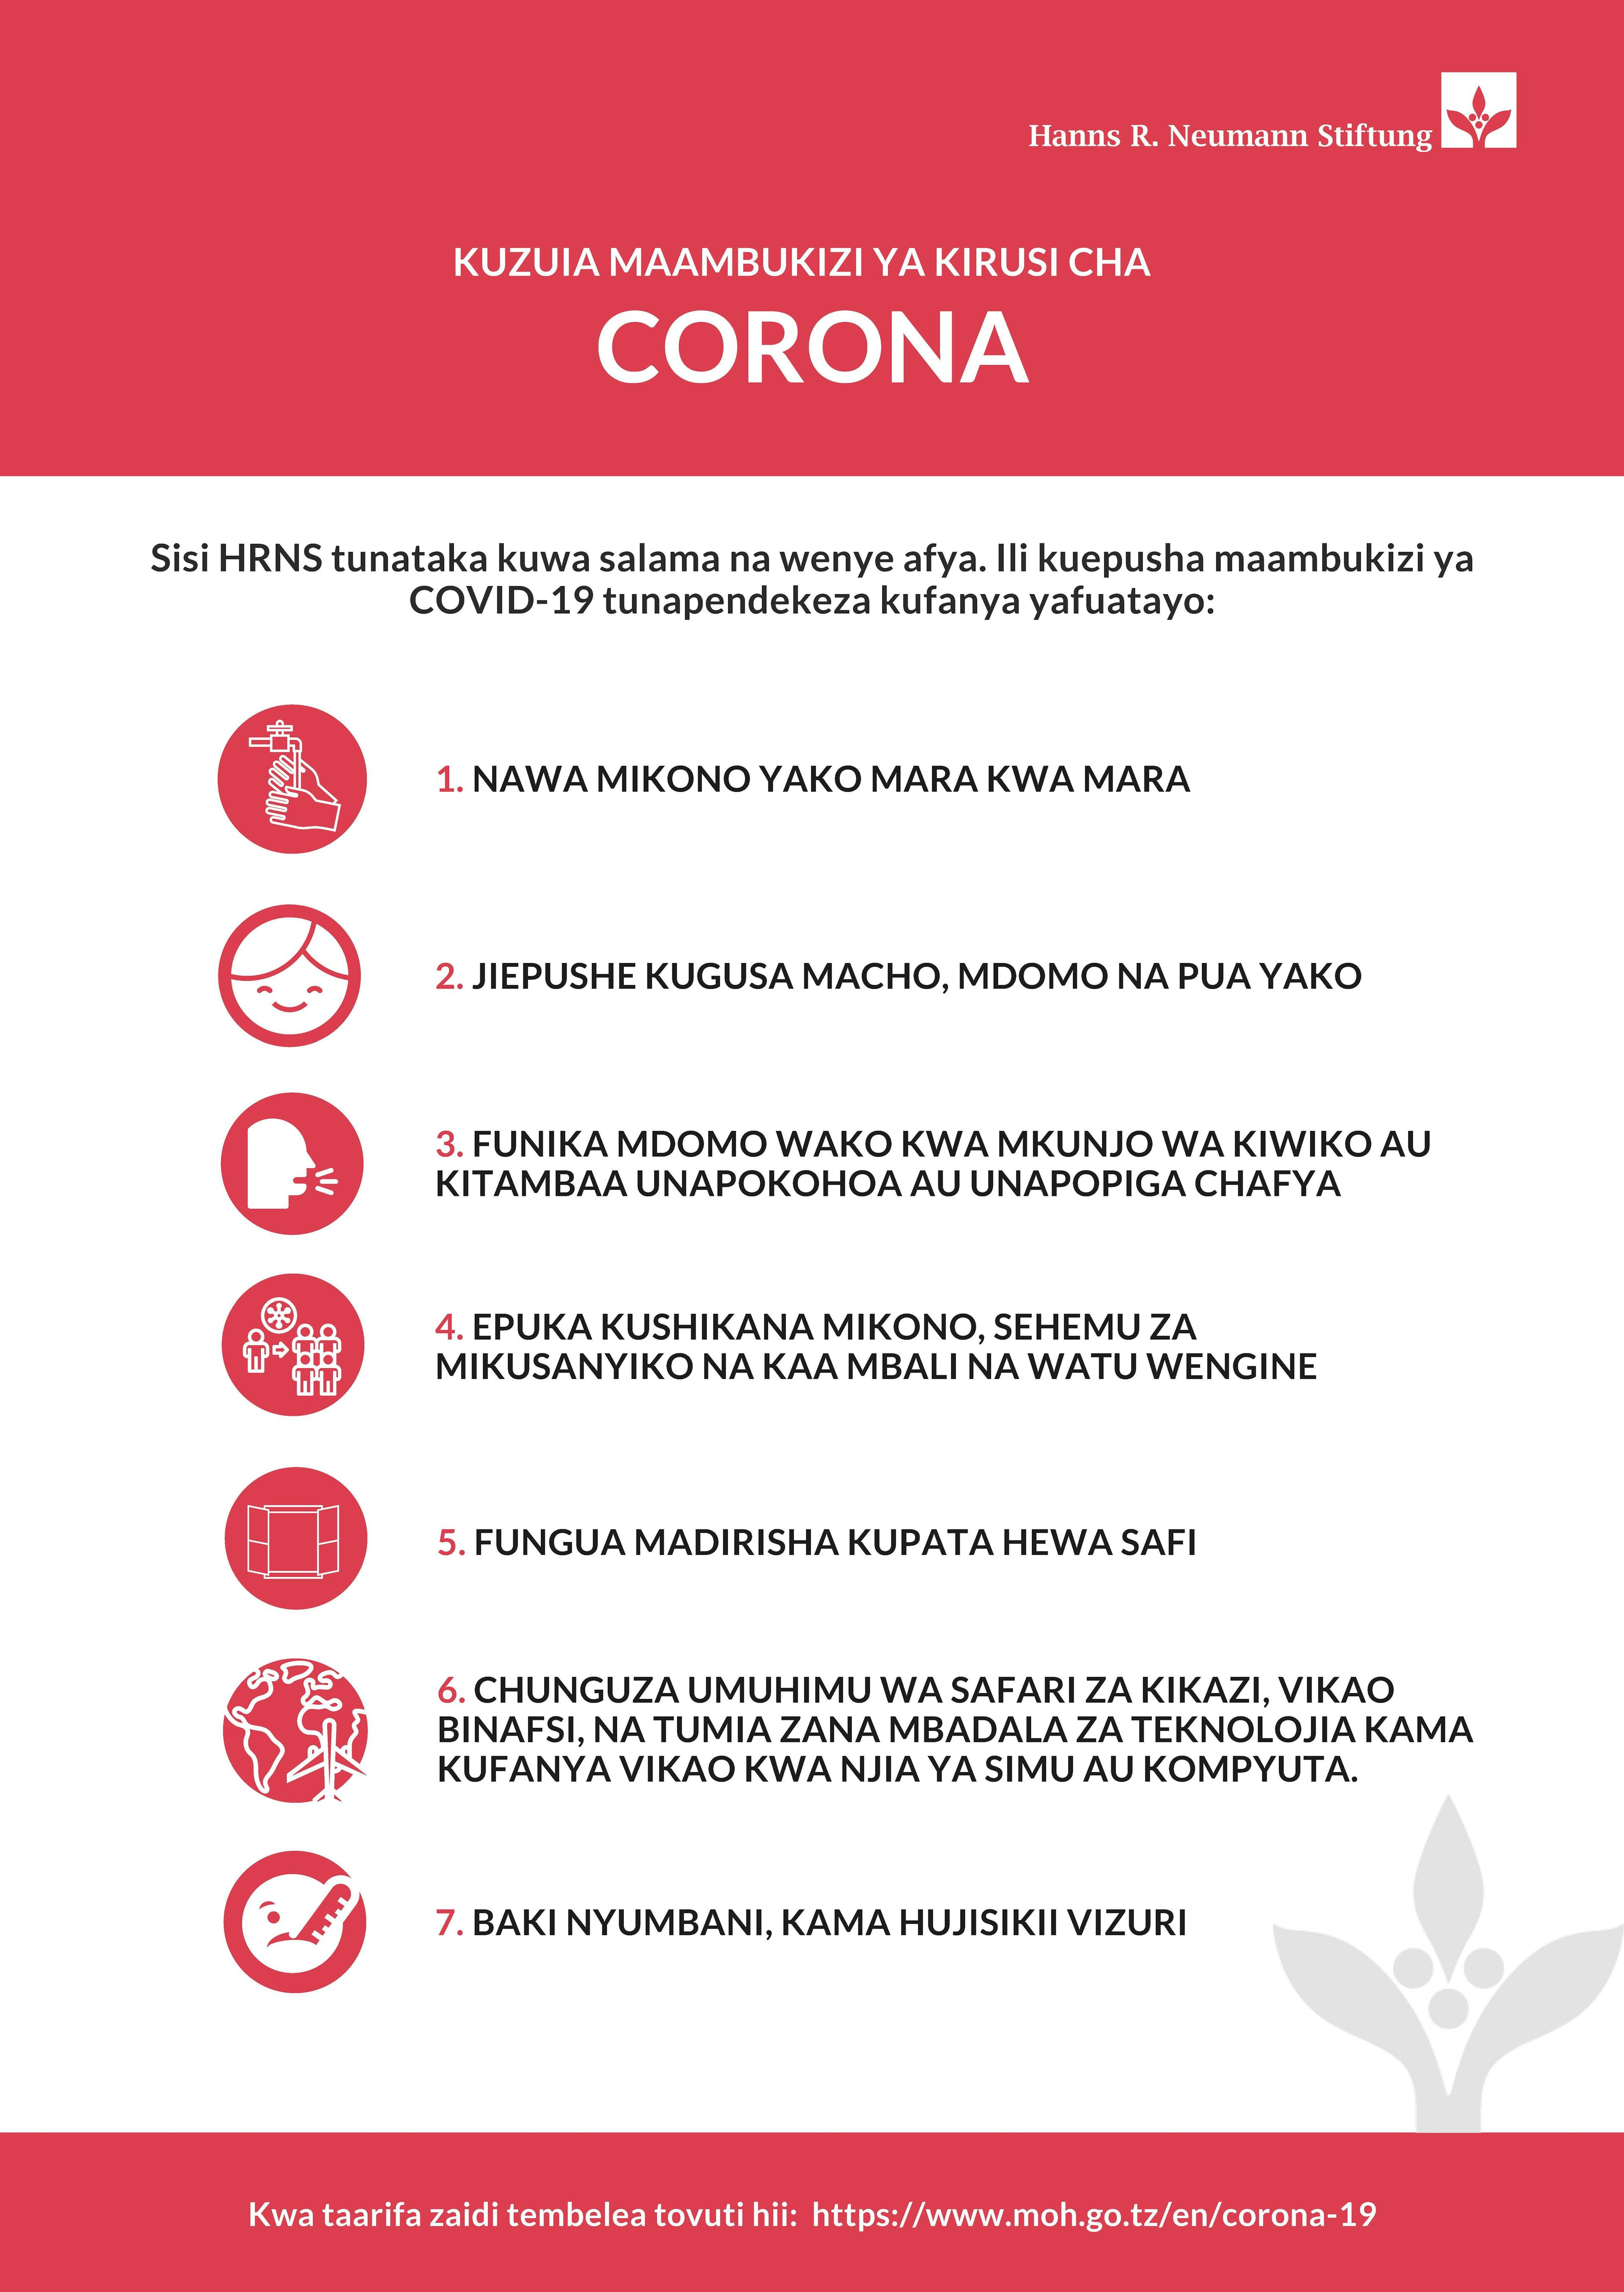 Corona Information in Swahili